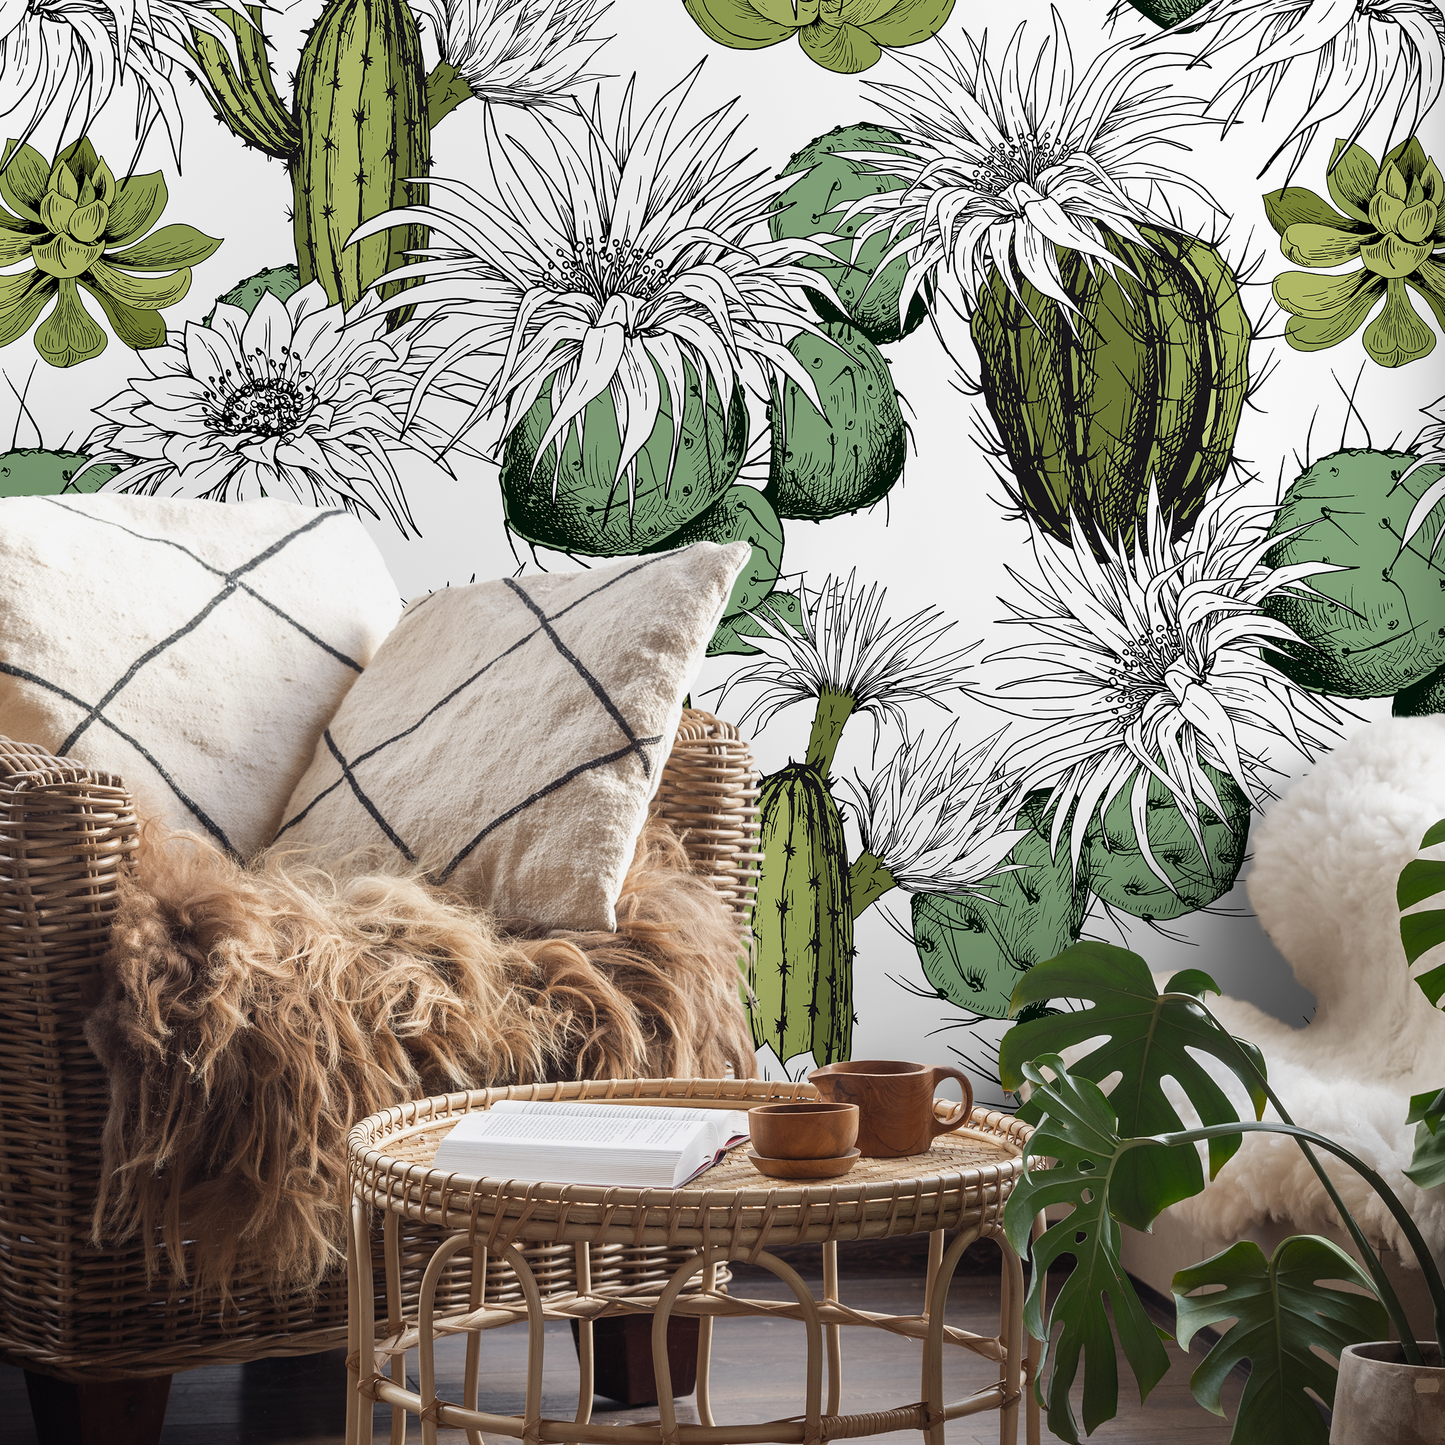 Floral Cactus Wallpaper Removable Wallpaper Peel and Stick Wallpaper Wall Paper Wall Mural - Tropical Wallpaper - A753